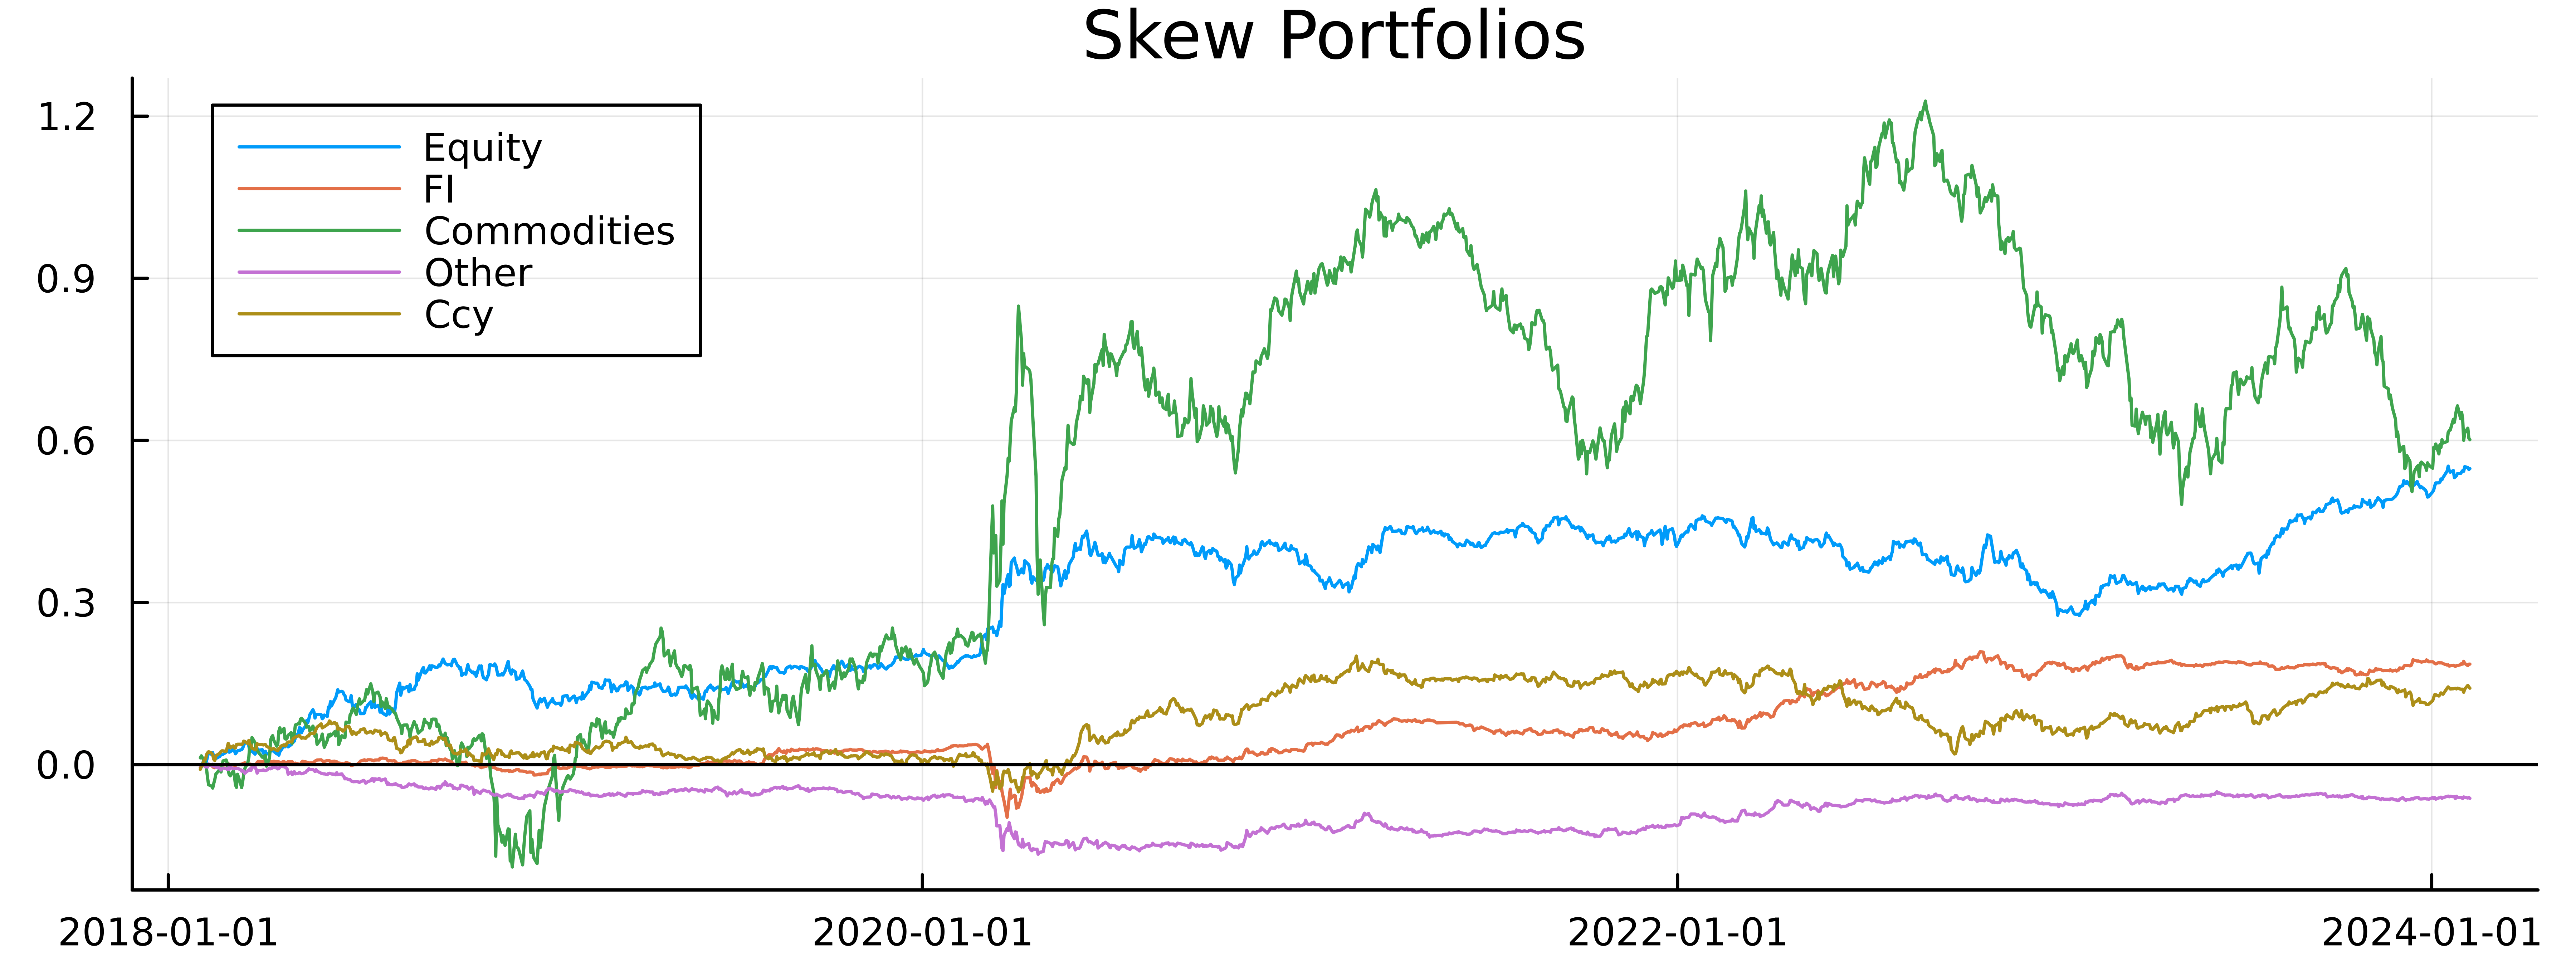 Asset class skew portfolios